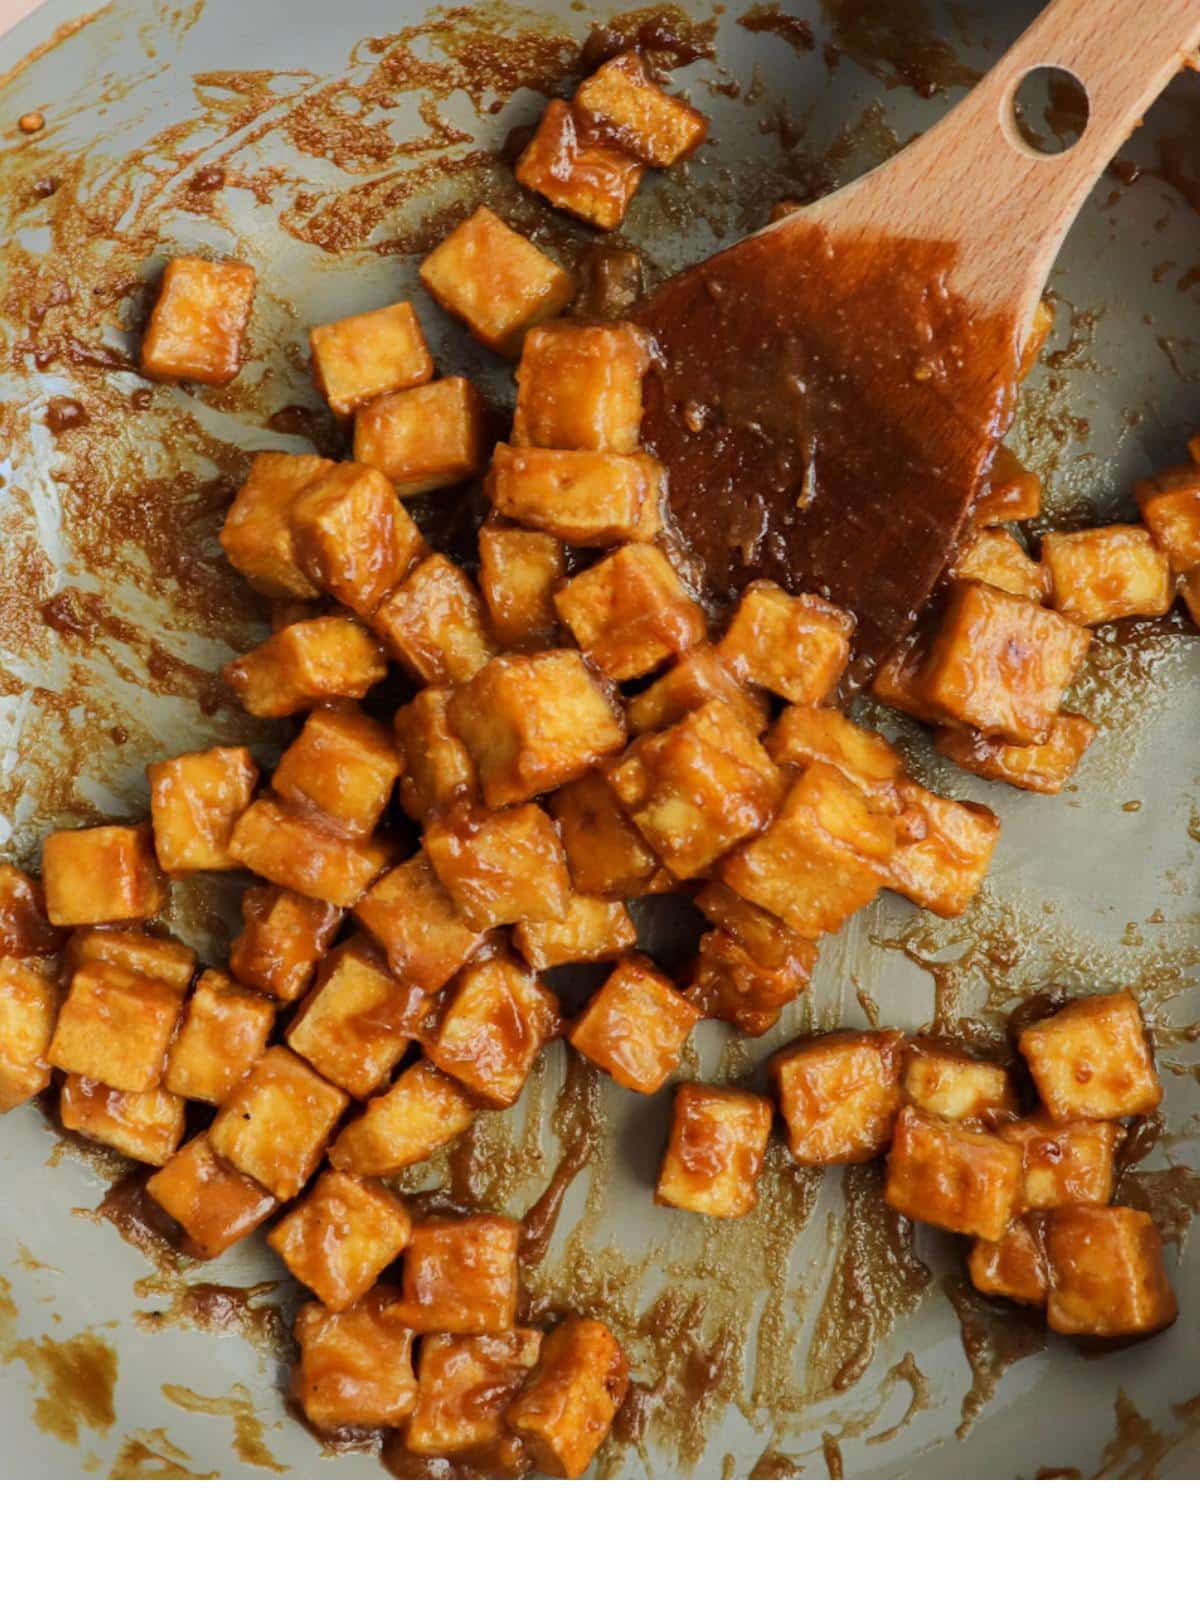 Crispy tofu cubes in a pan after adding sauce.